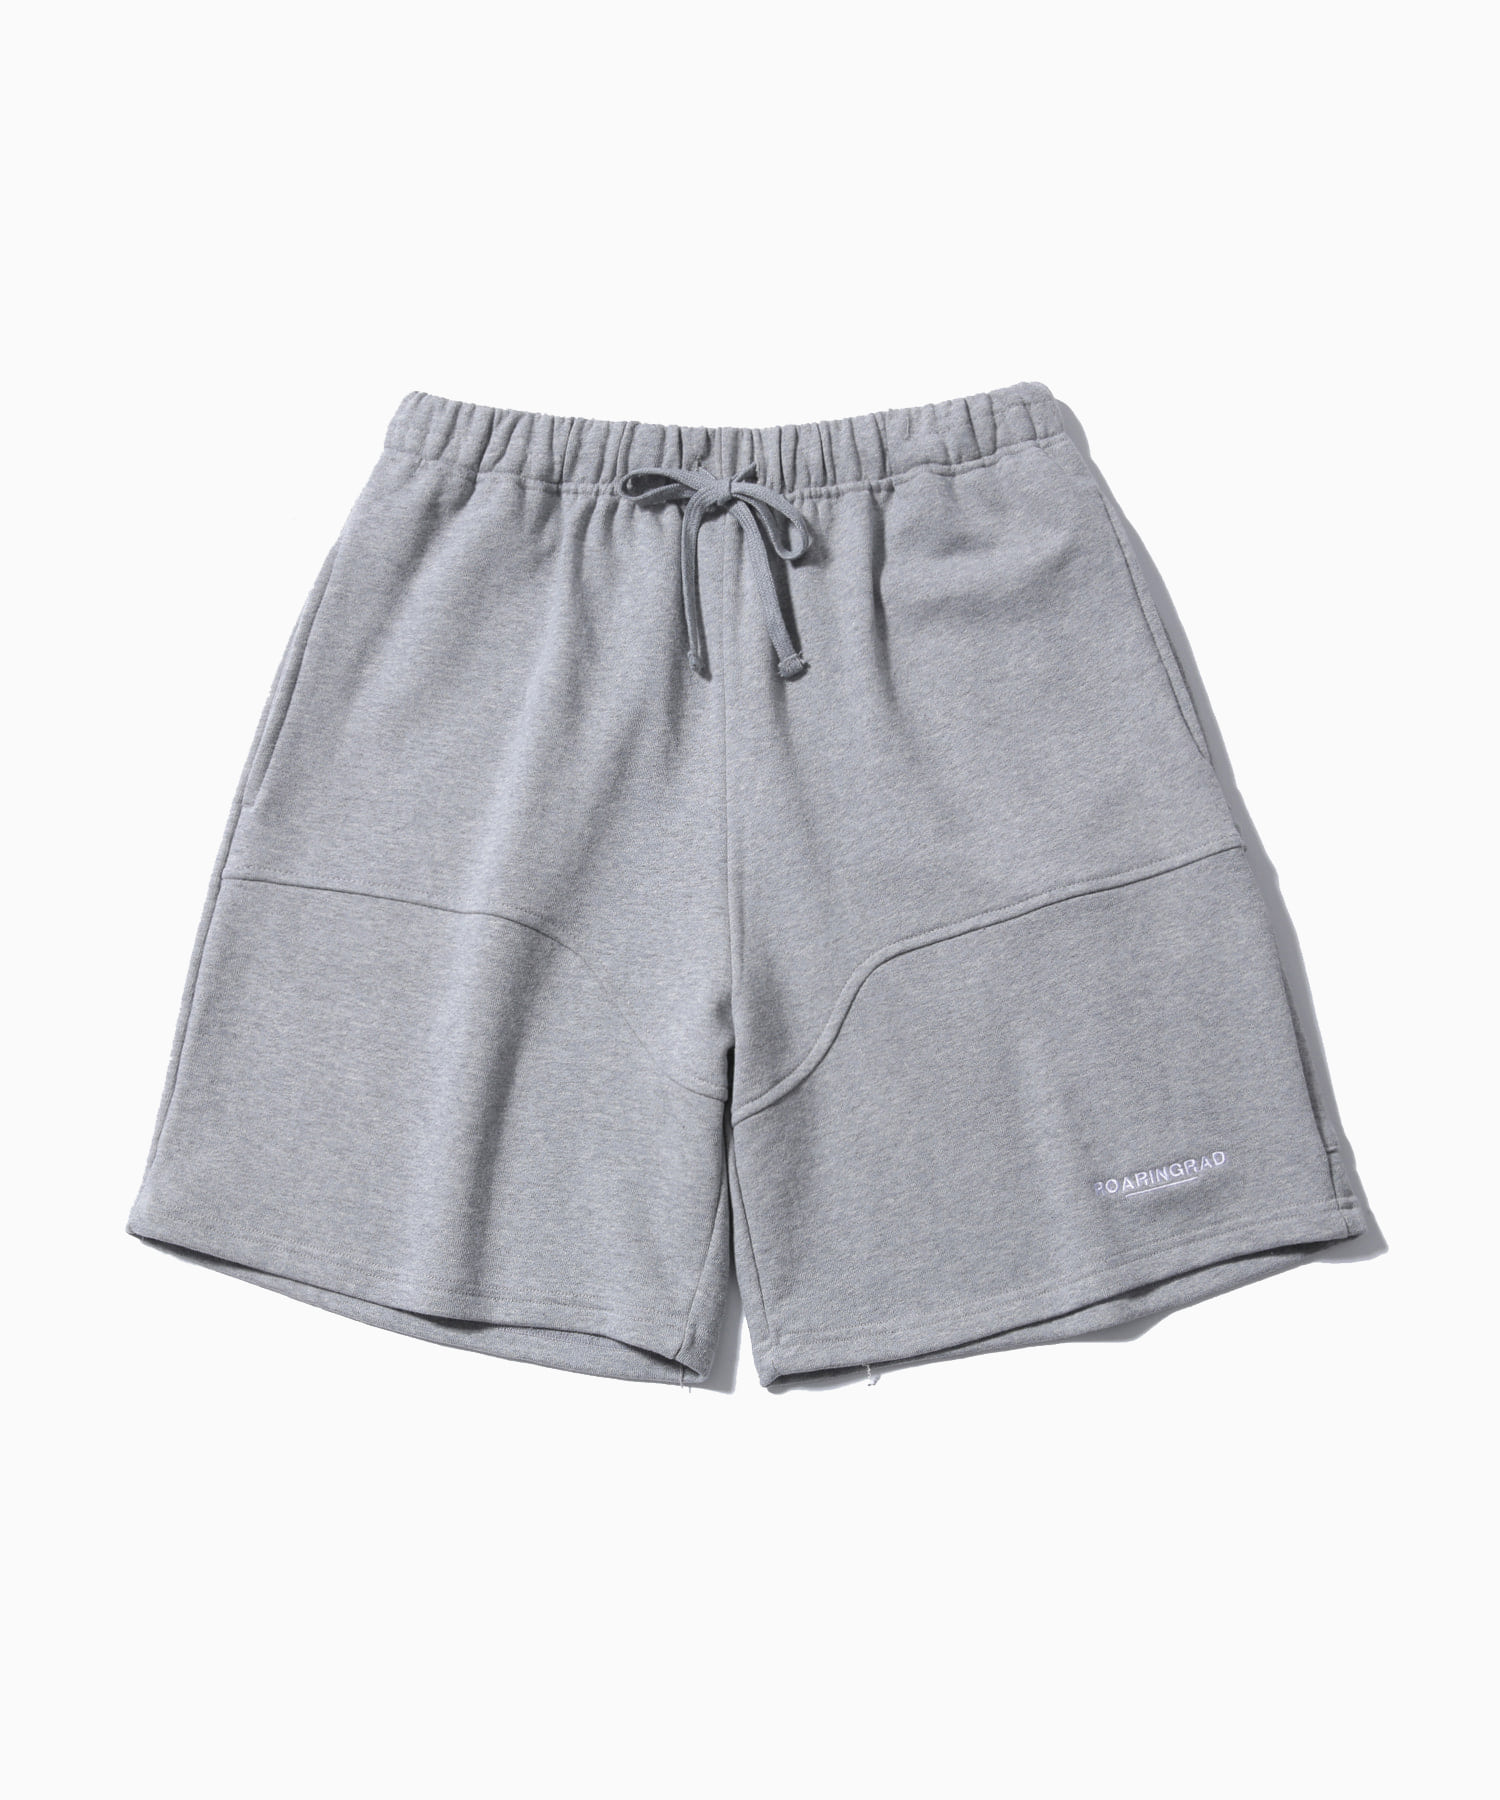 pocket sweat half pants gray - 로어링라드(ROARINGRAD)